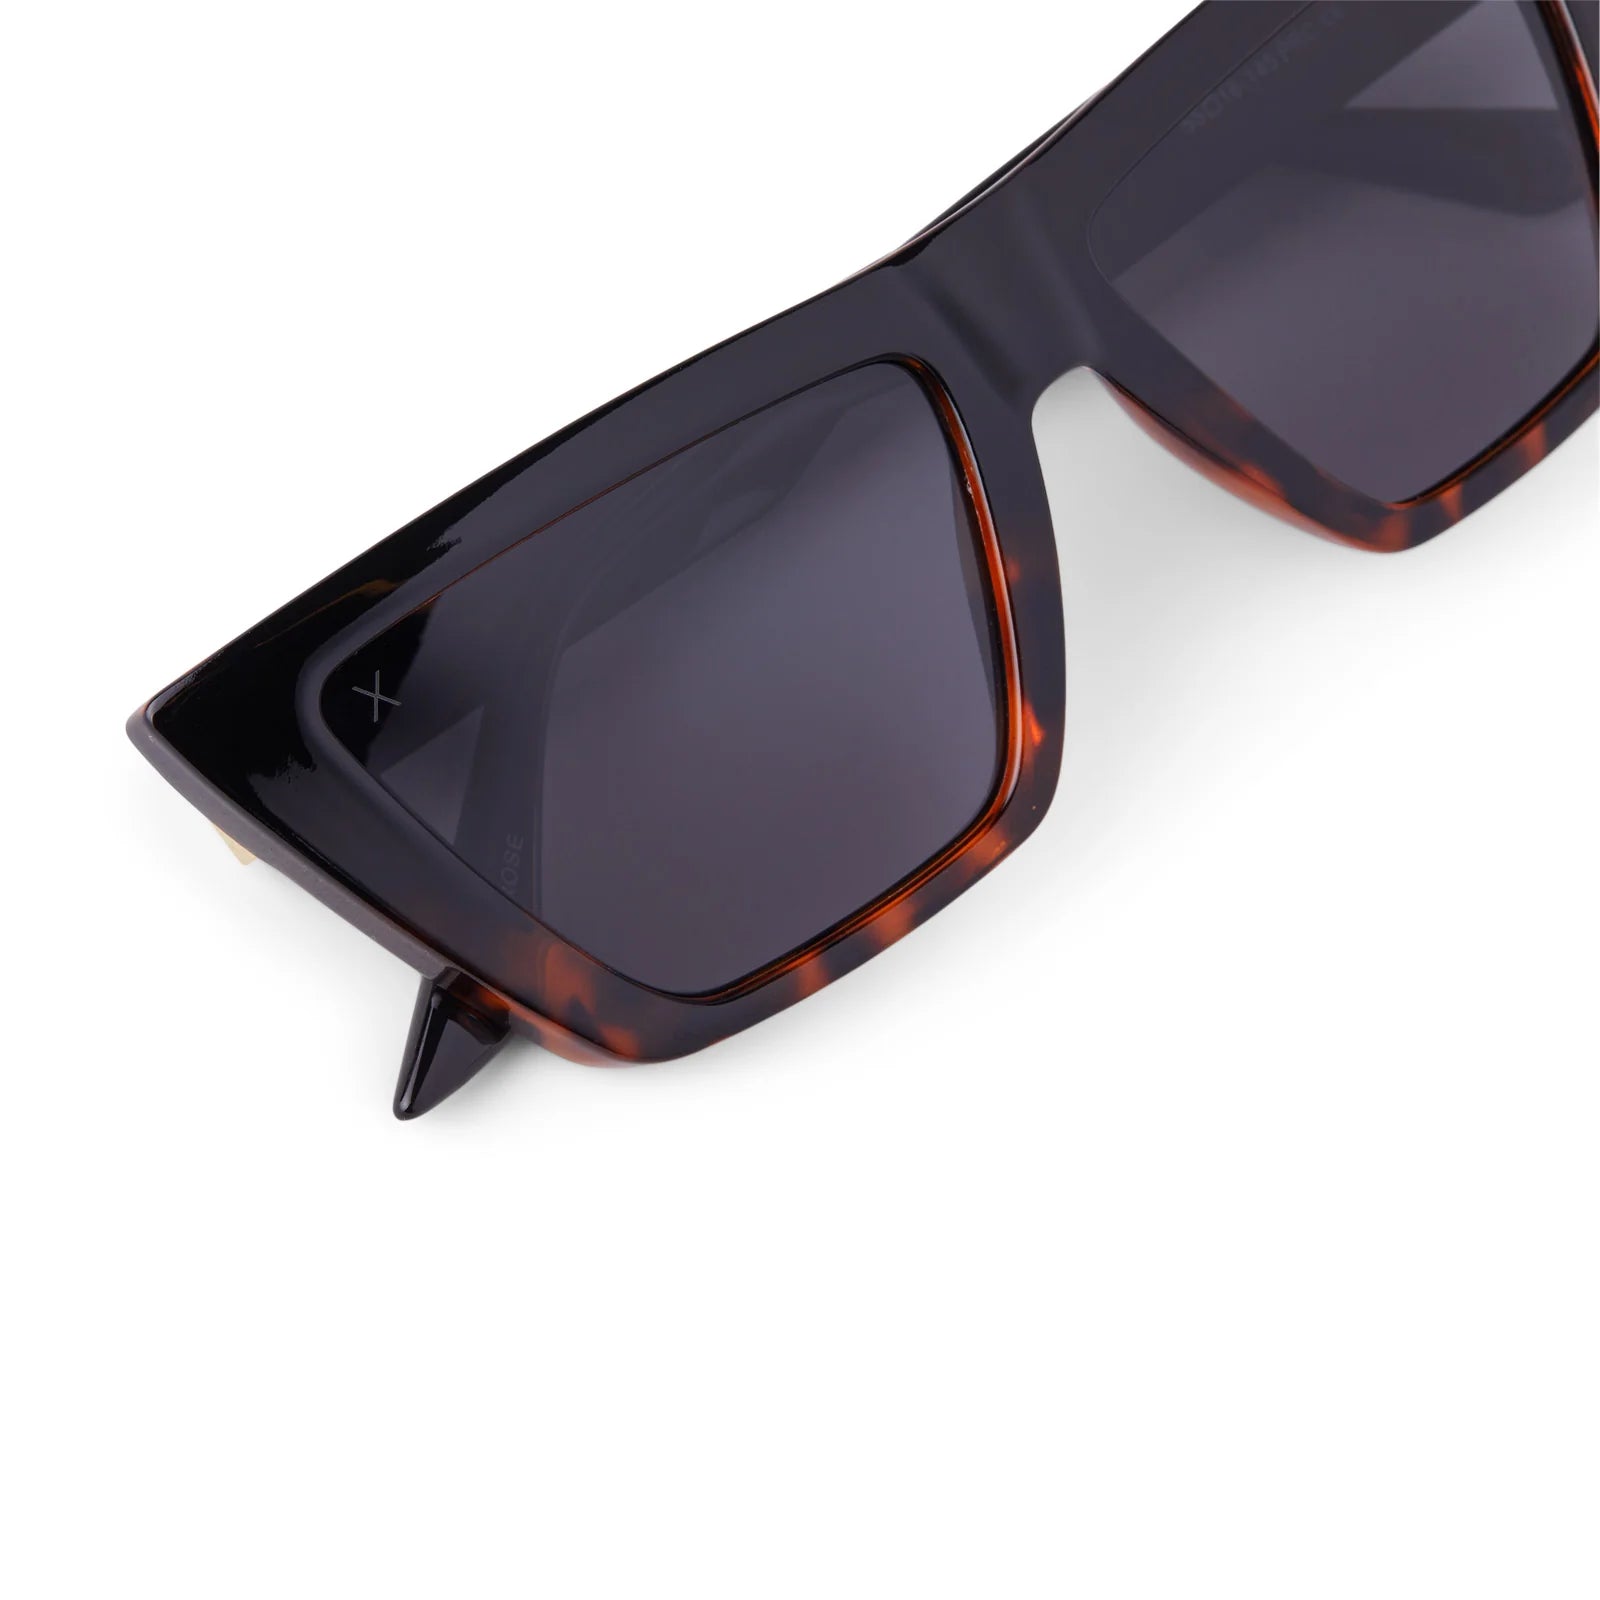 Melrose Polarized Sunglasses